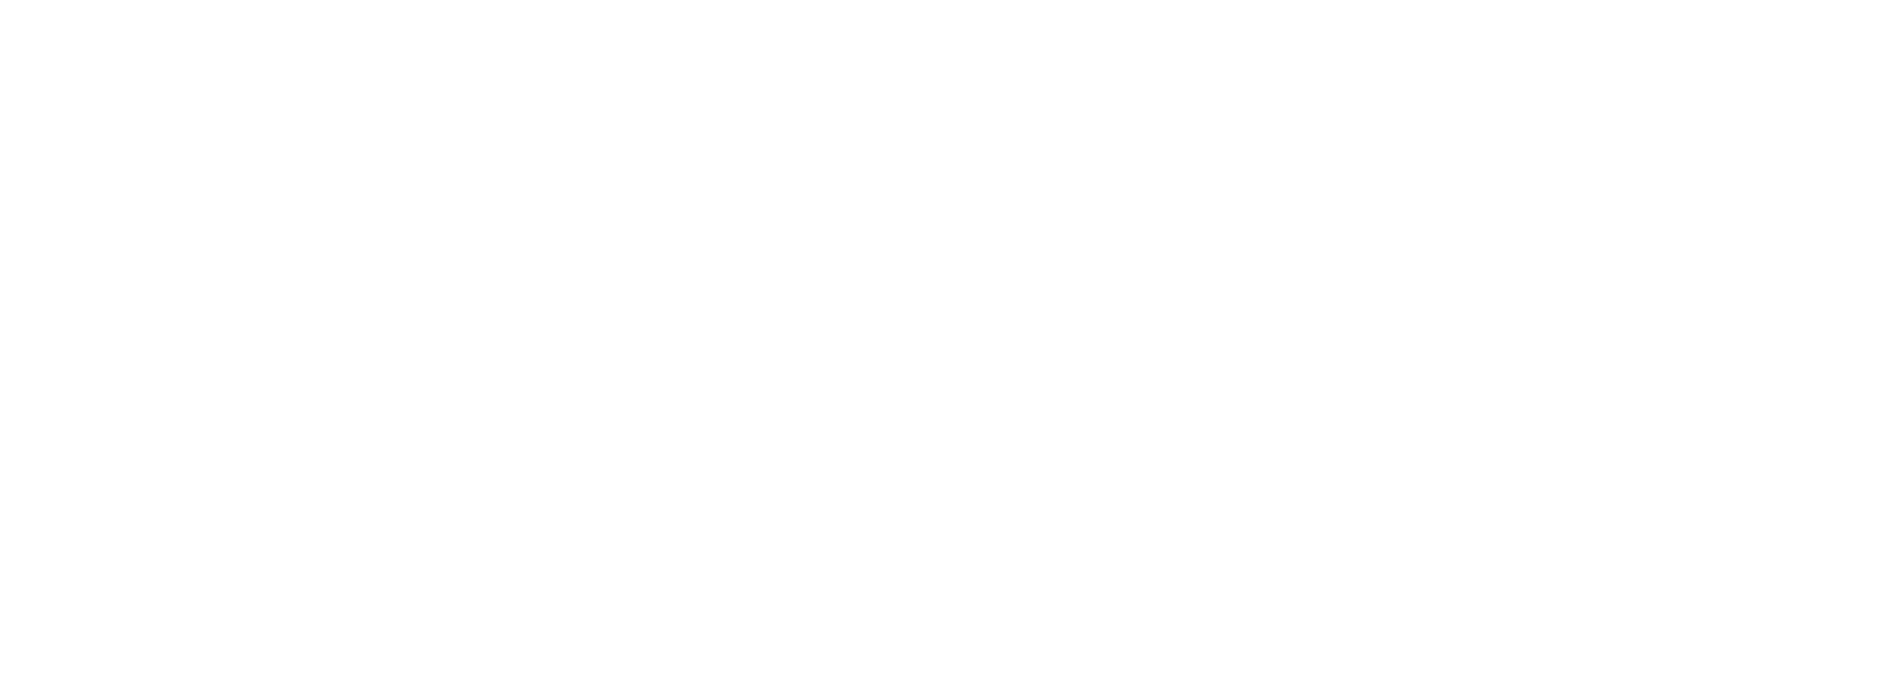 BEnergyAware